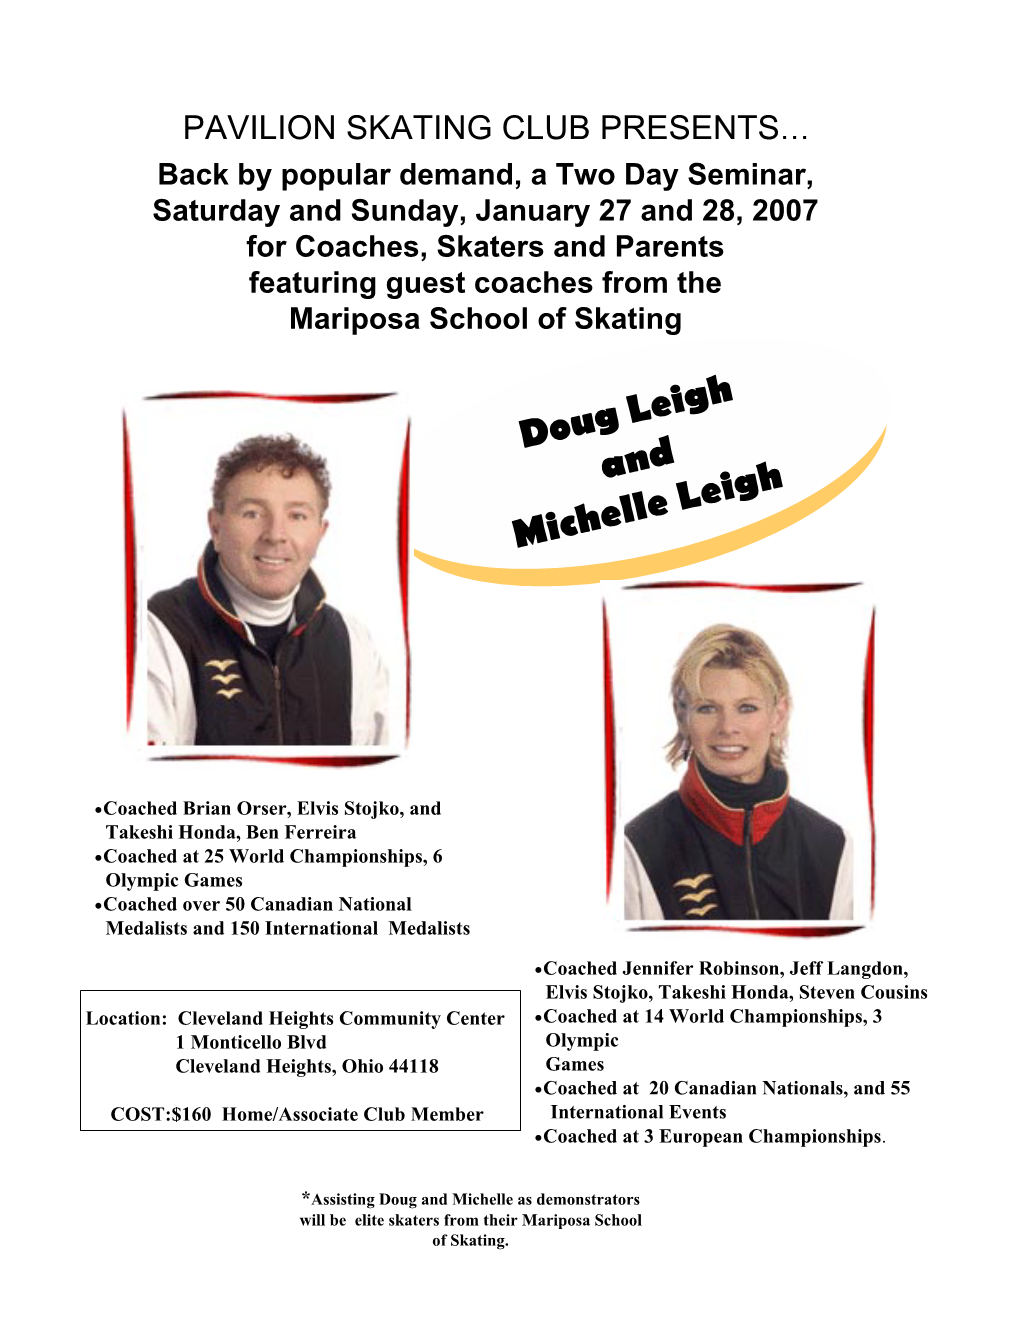 Doug Leigh and Michelle Leigh